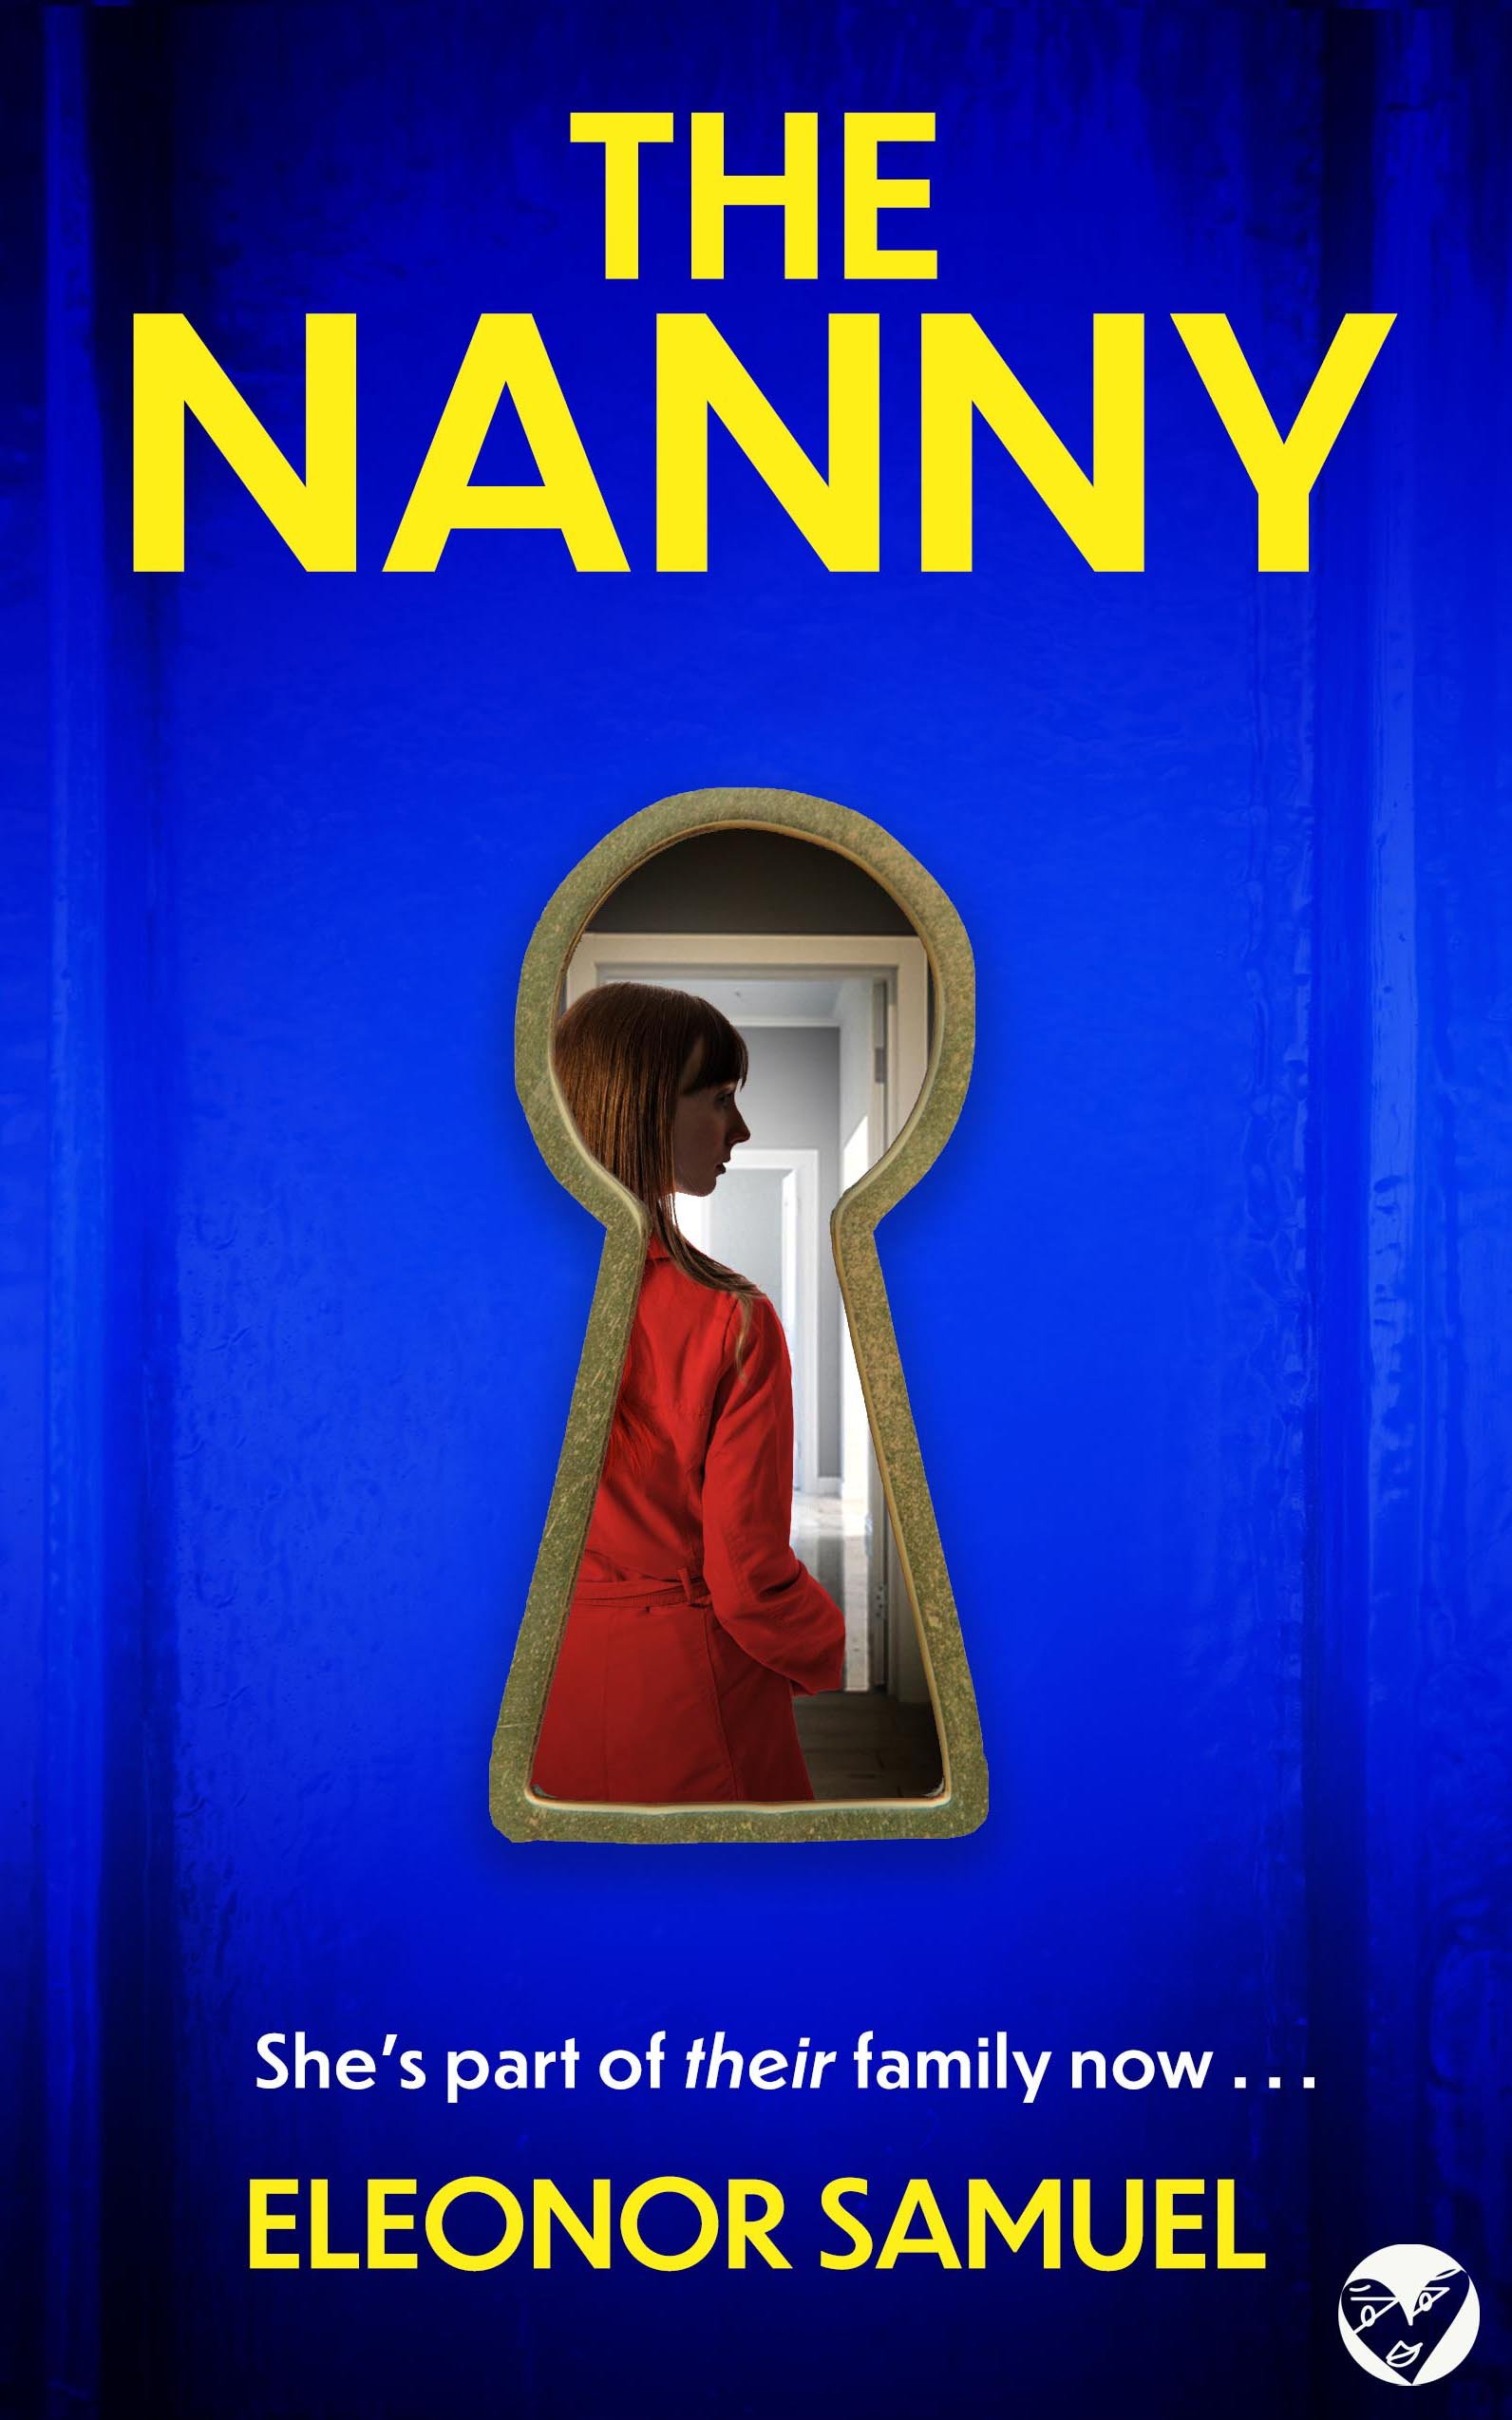 THE NANNY cover publish (1).jpg